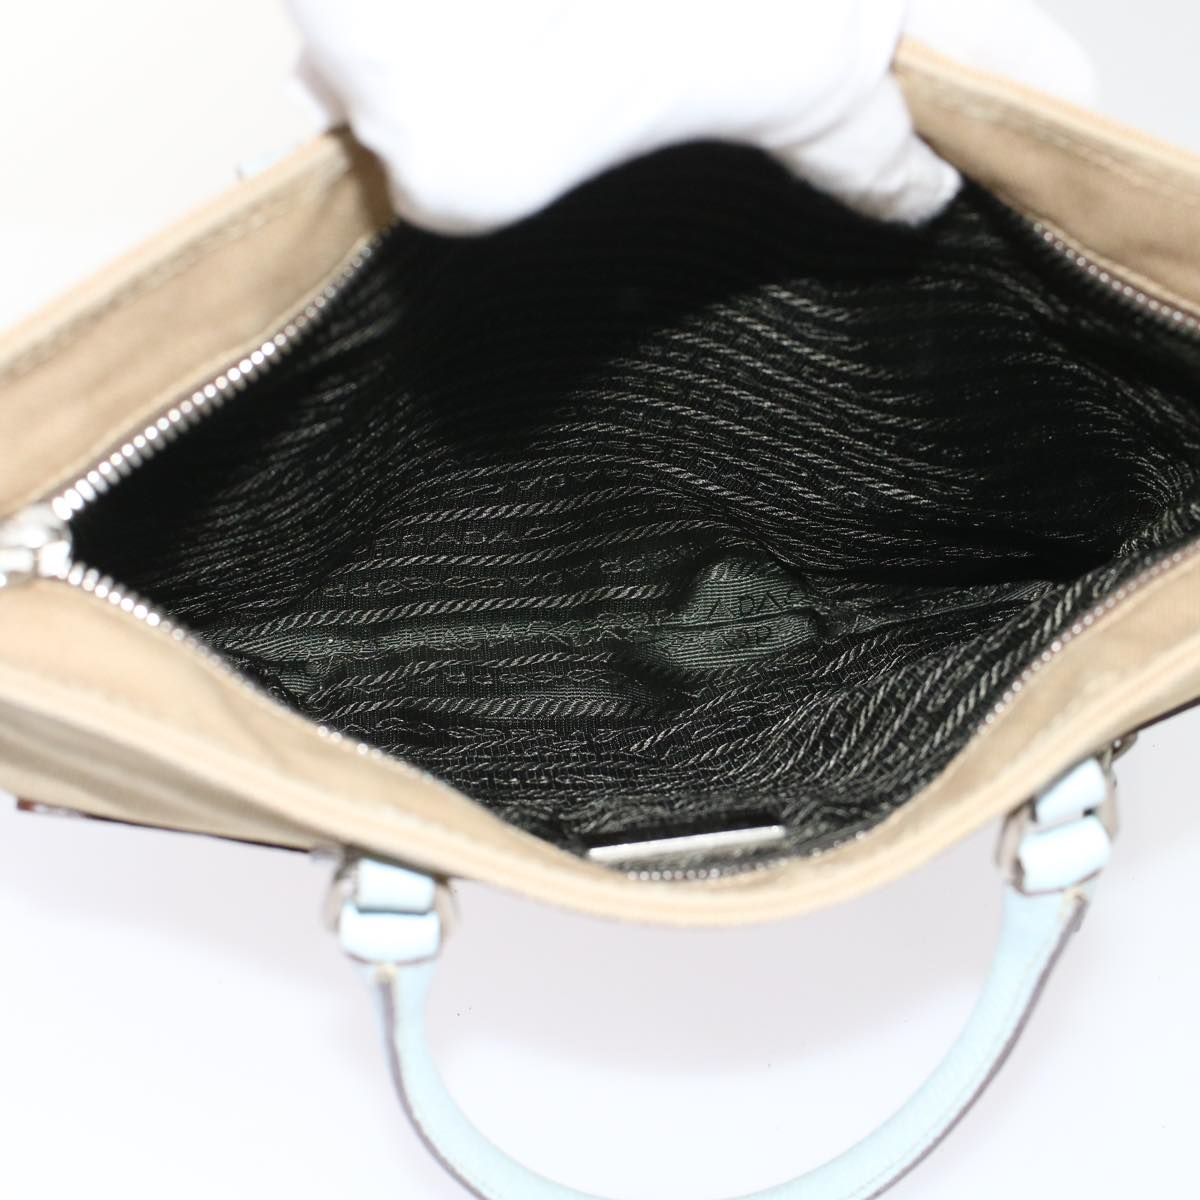 PRADA Tote Bag Canvas Leather Beige Auth 48761